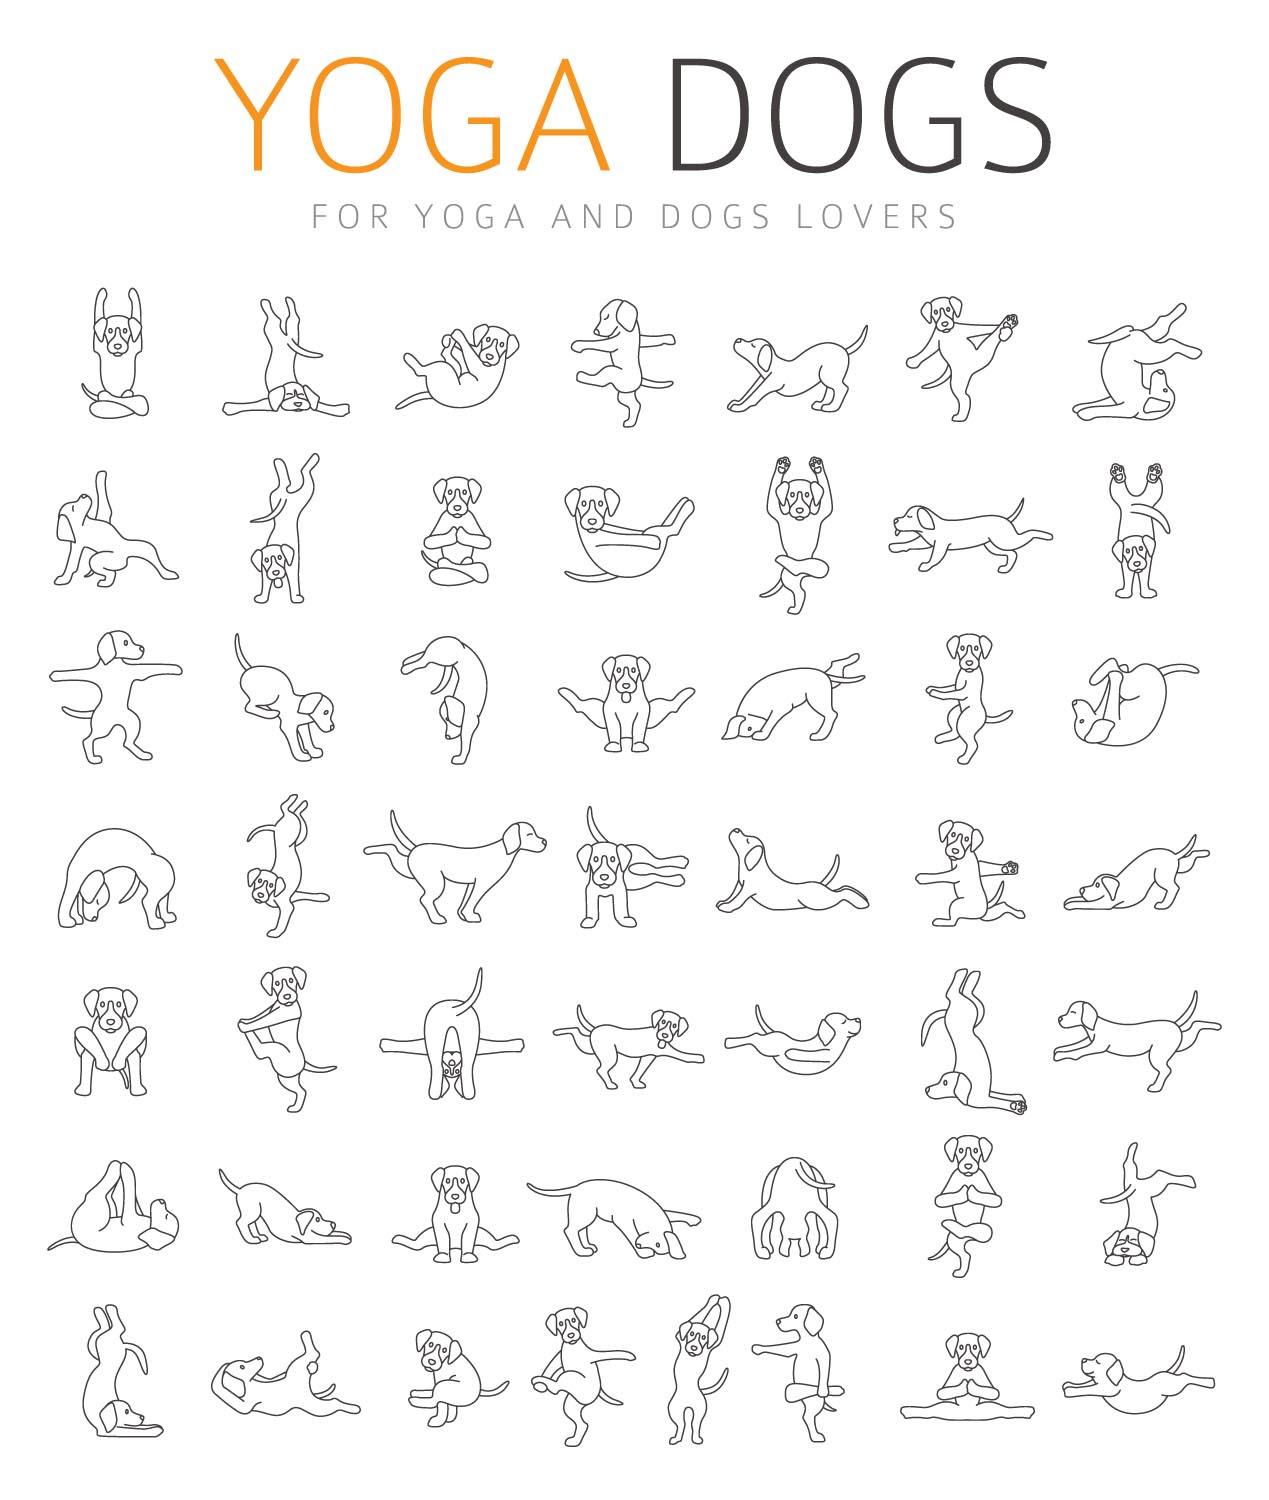 Yoga Dogs Wall Sticker: Peel-N-Stick wall decal